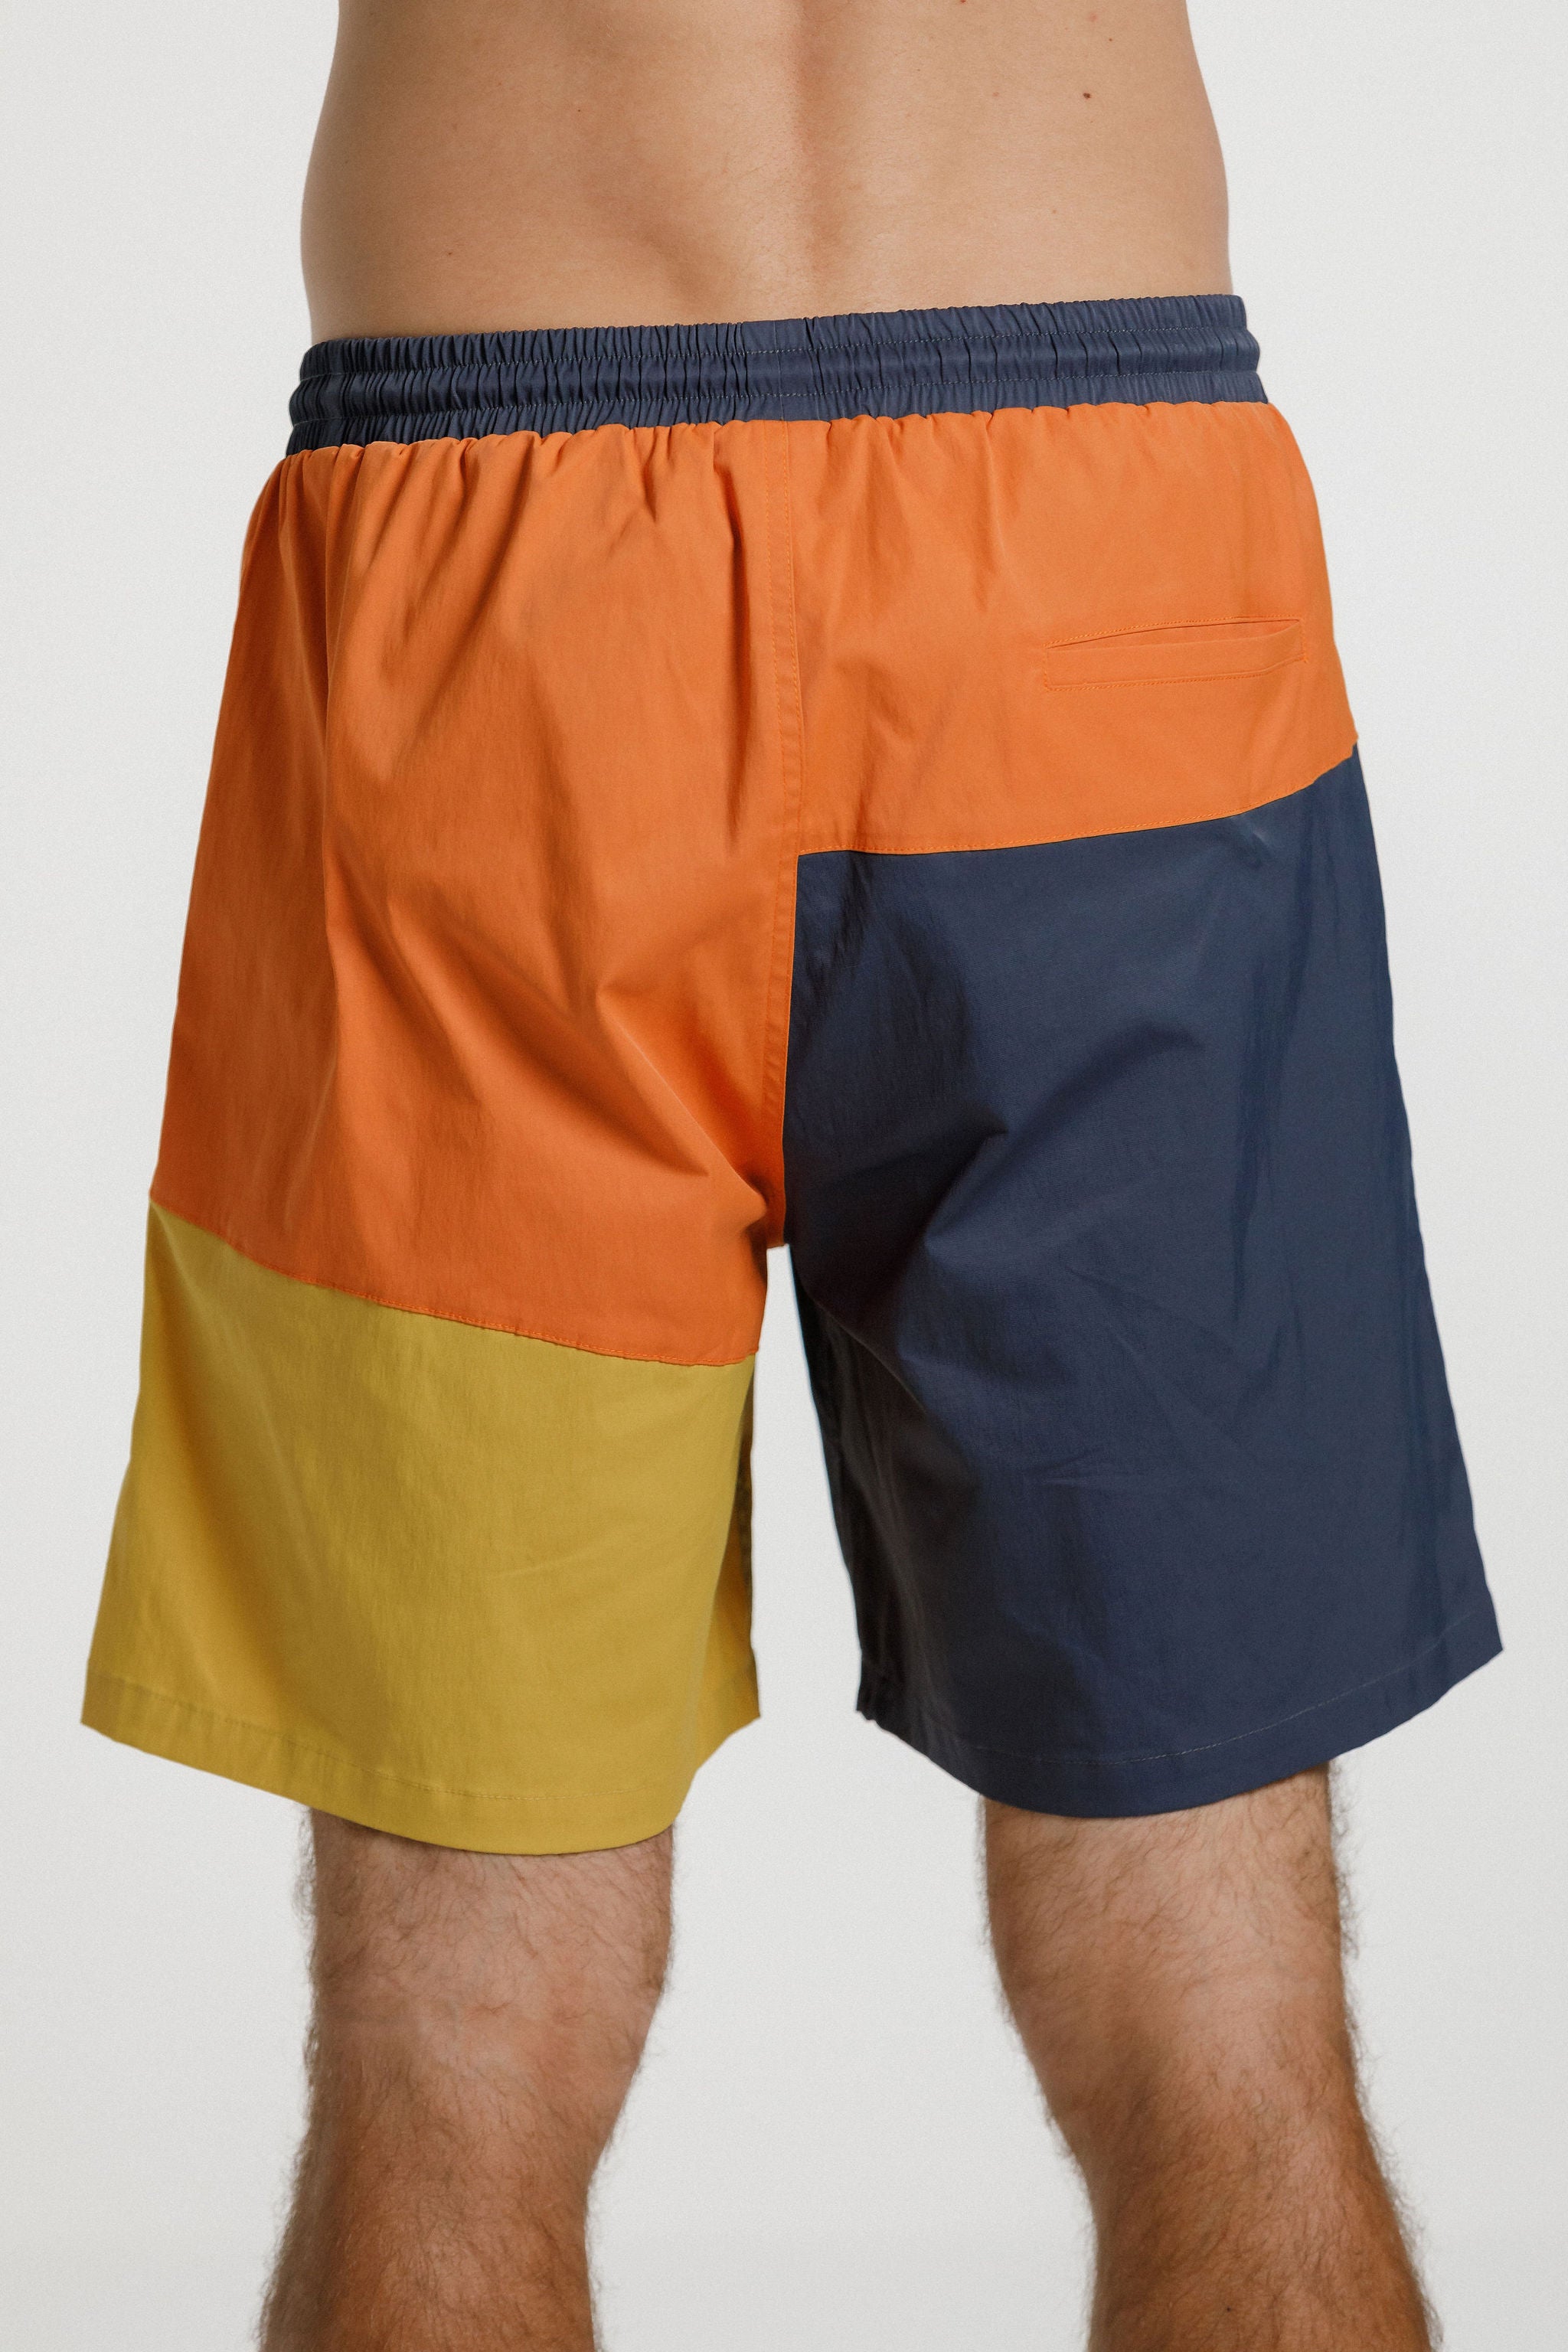 Wavy Short - Slate/Orange/Yellow